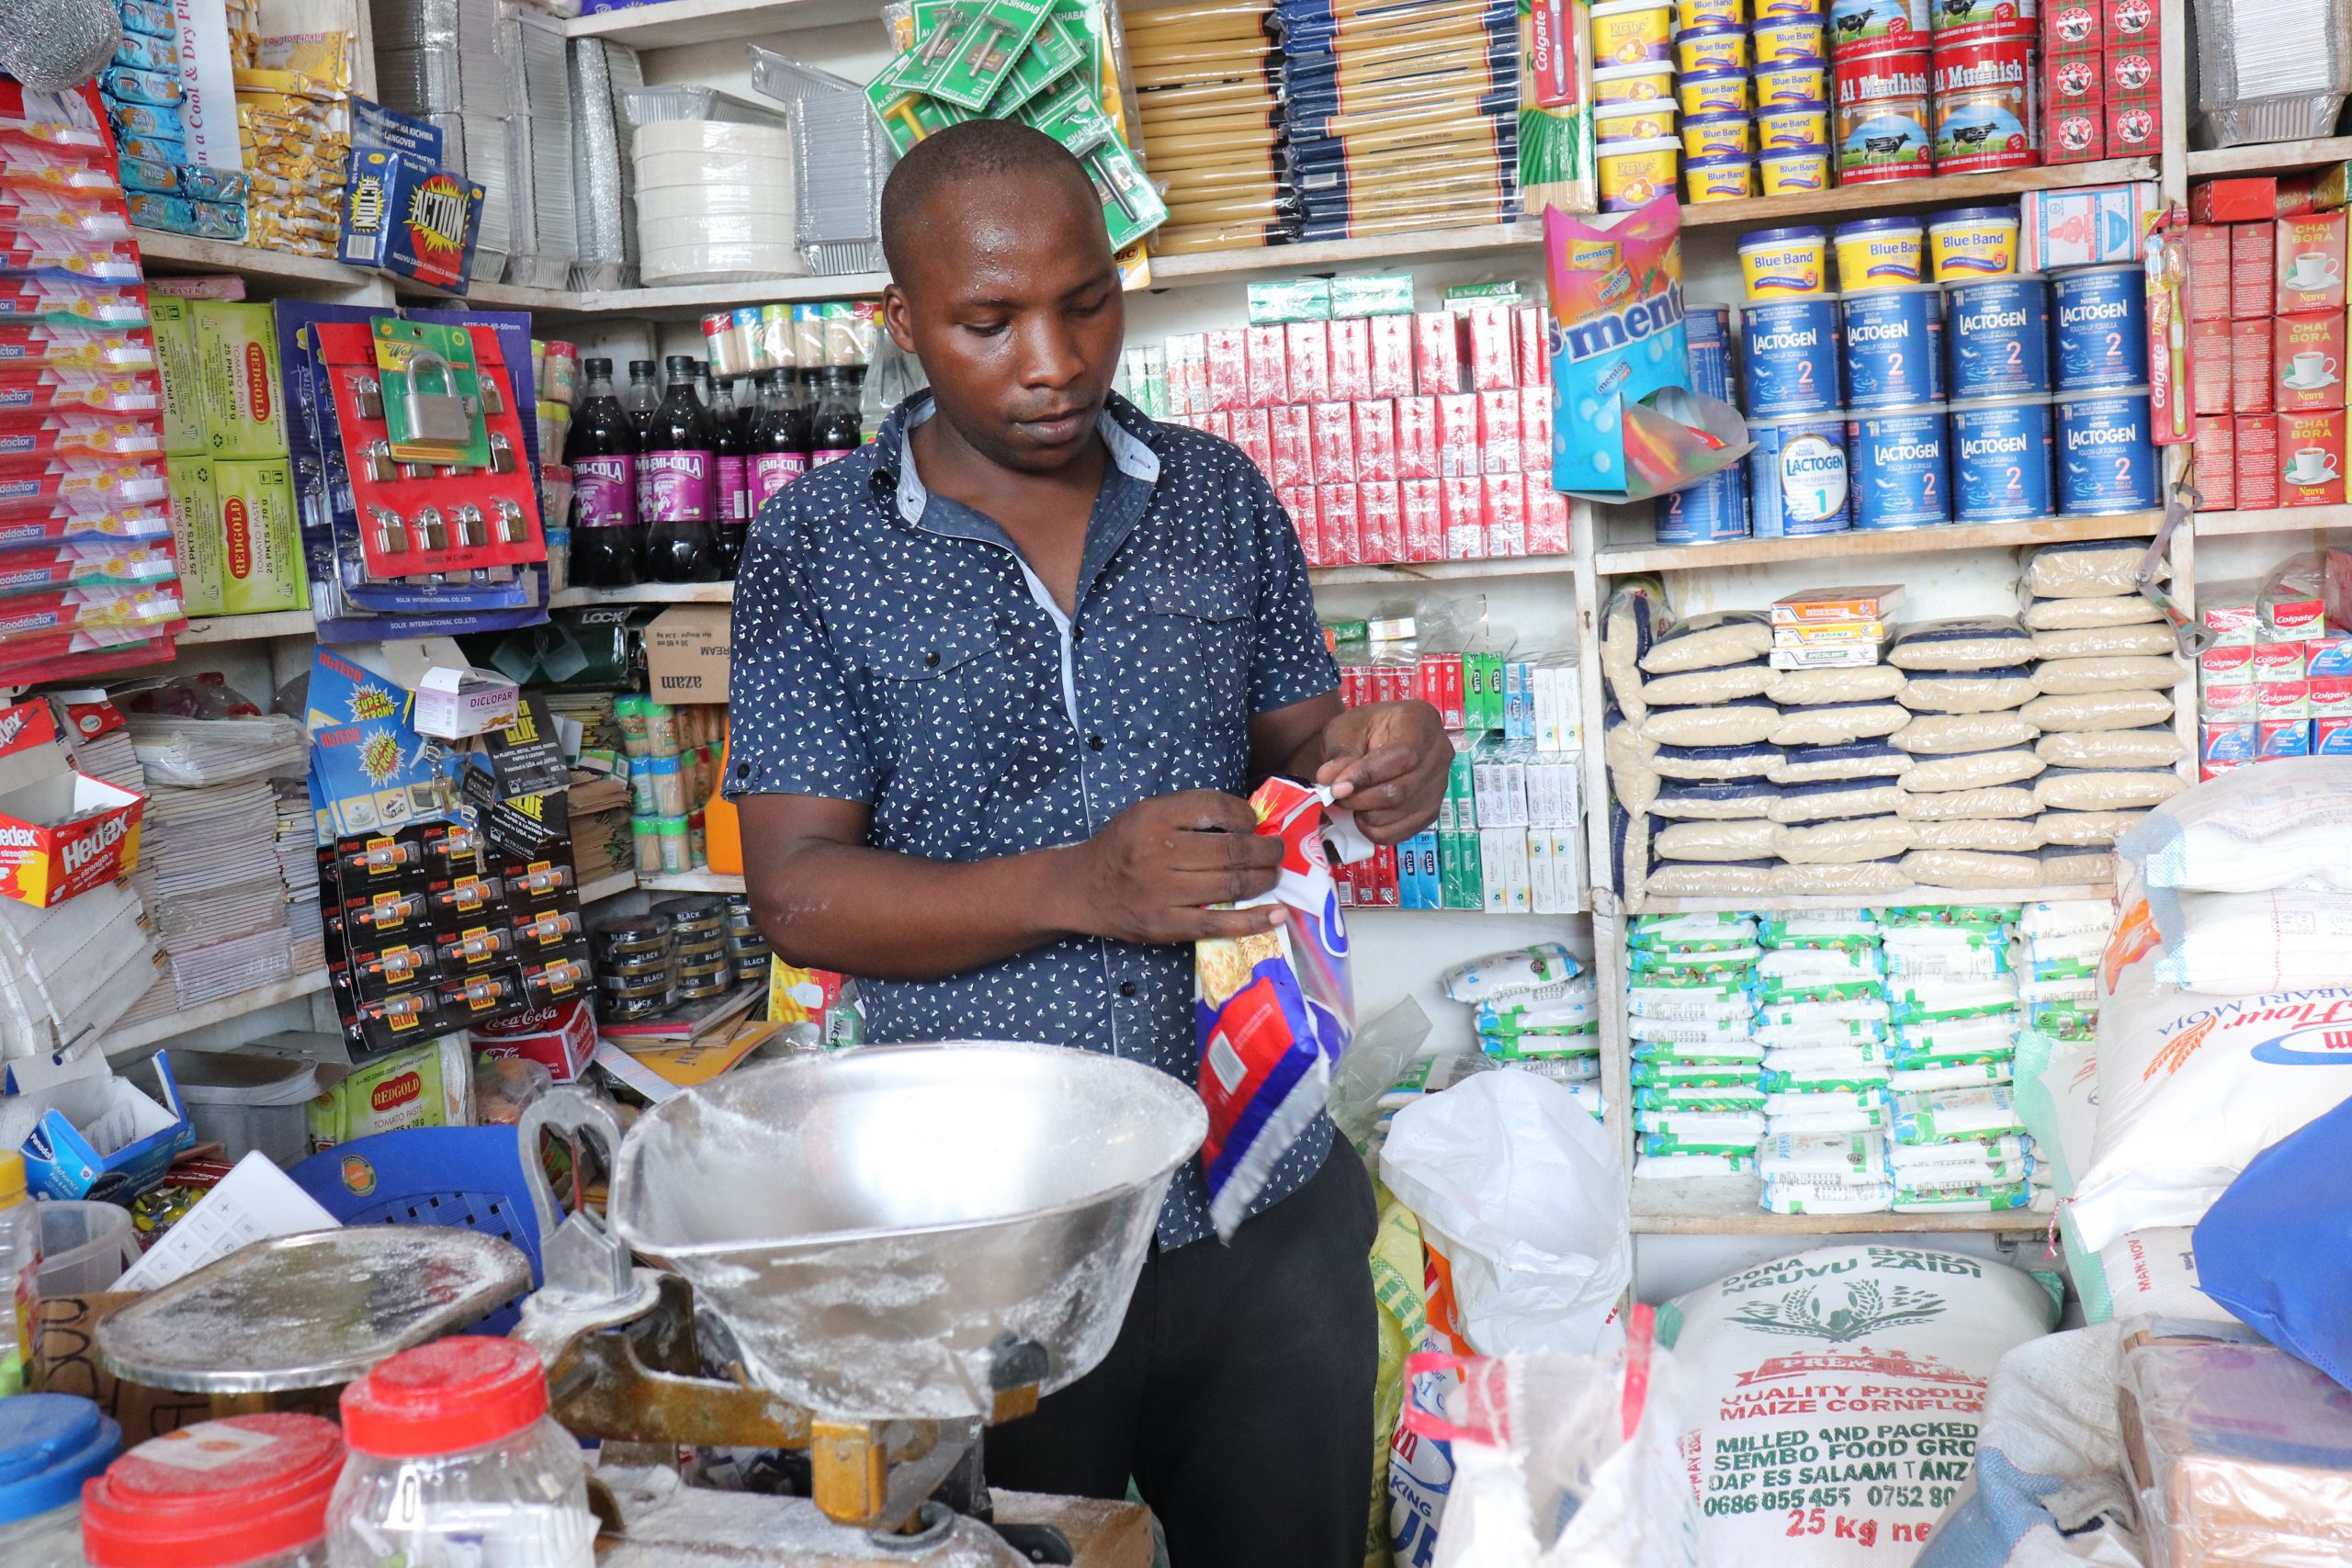 Emanuel Barosha Ndiwene organizes products in his small shop in Dar es Salaam, Tanzania